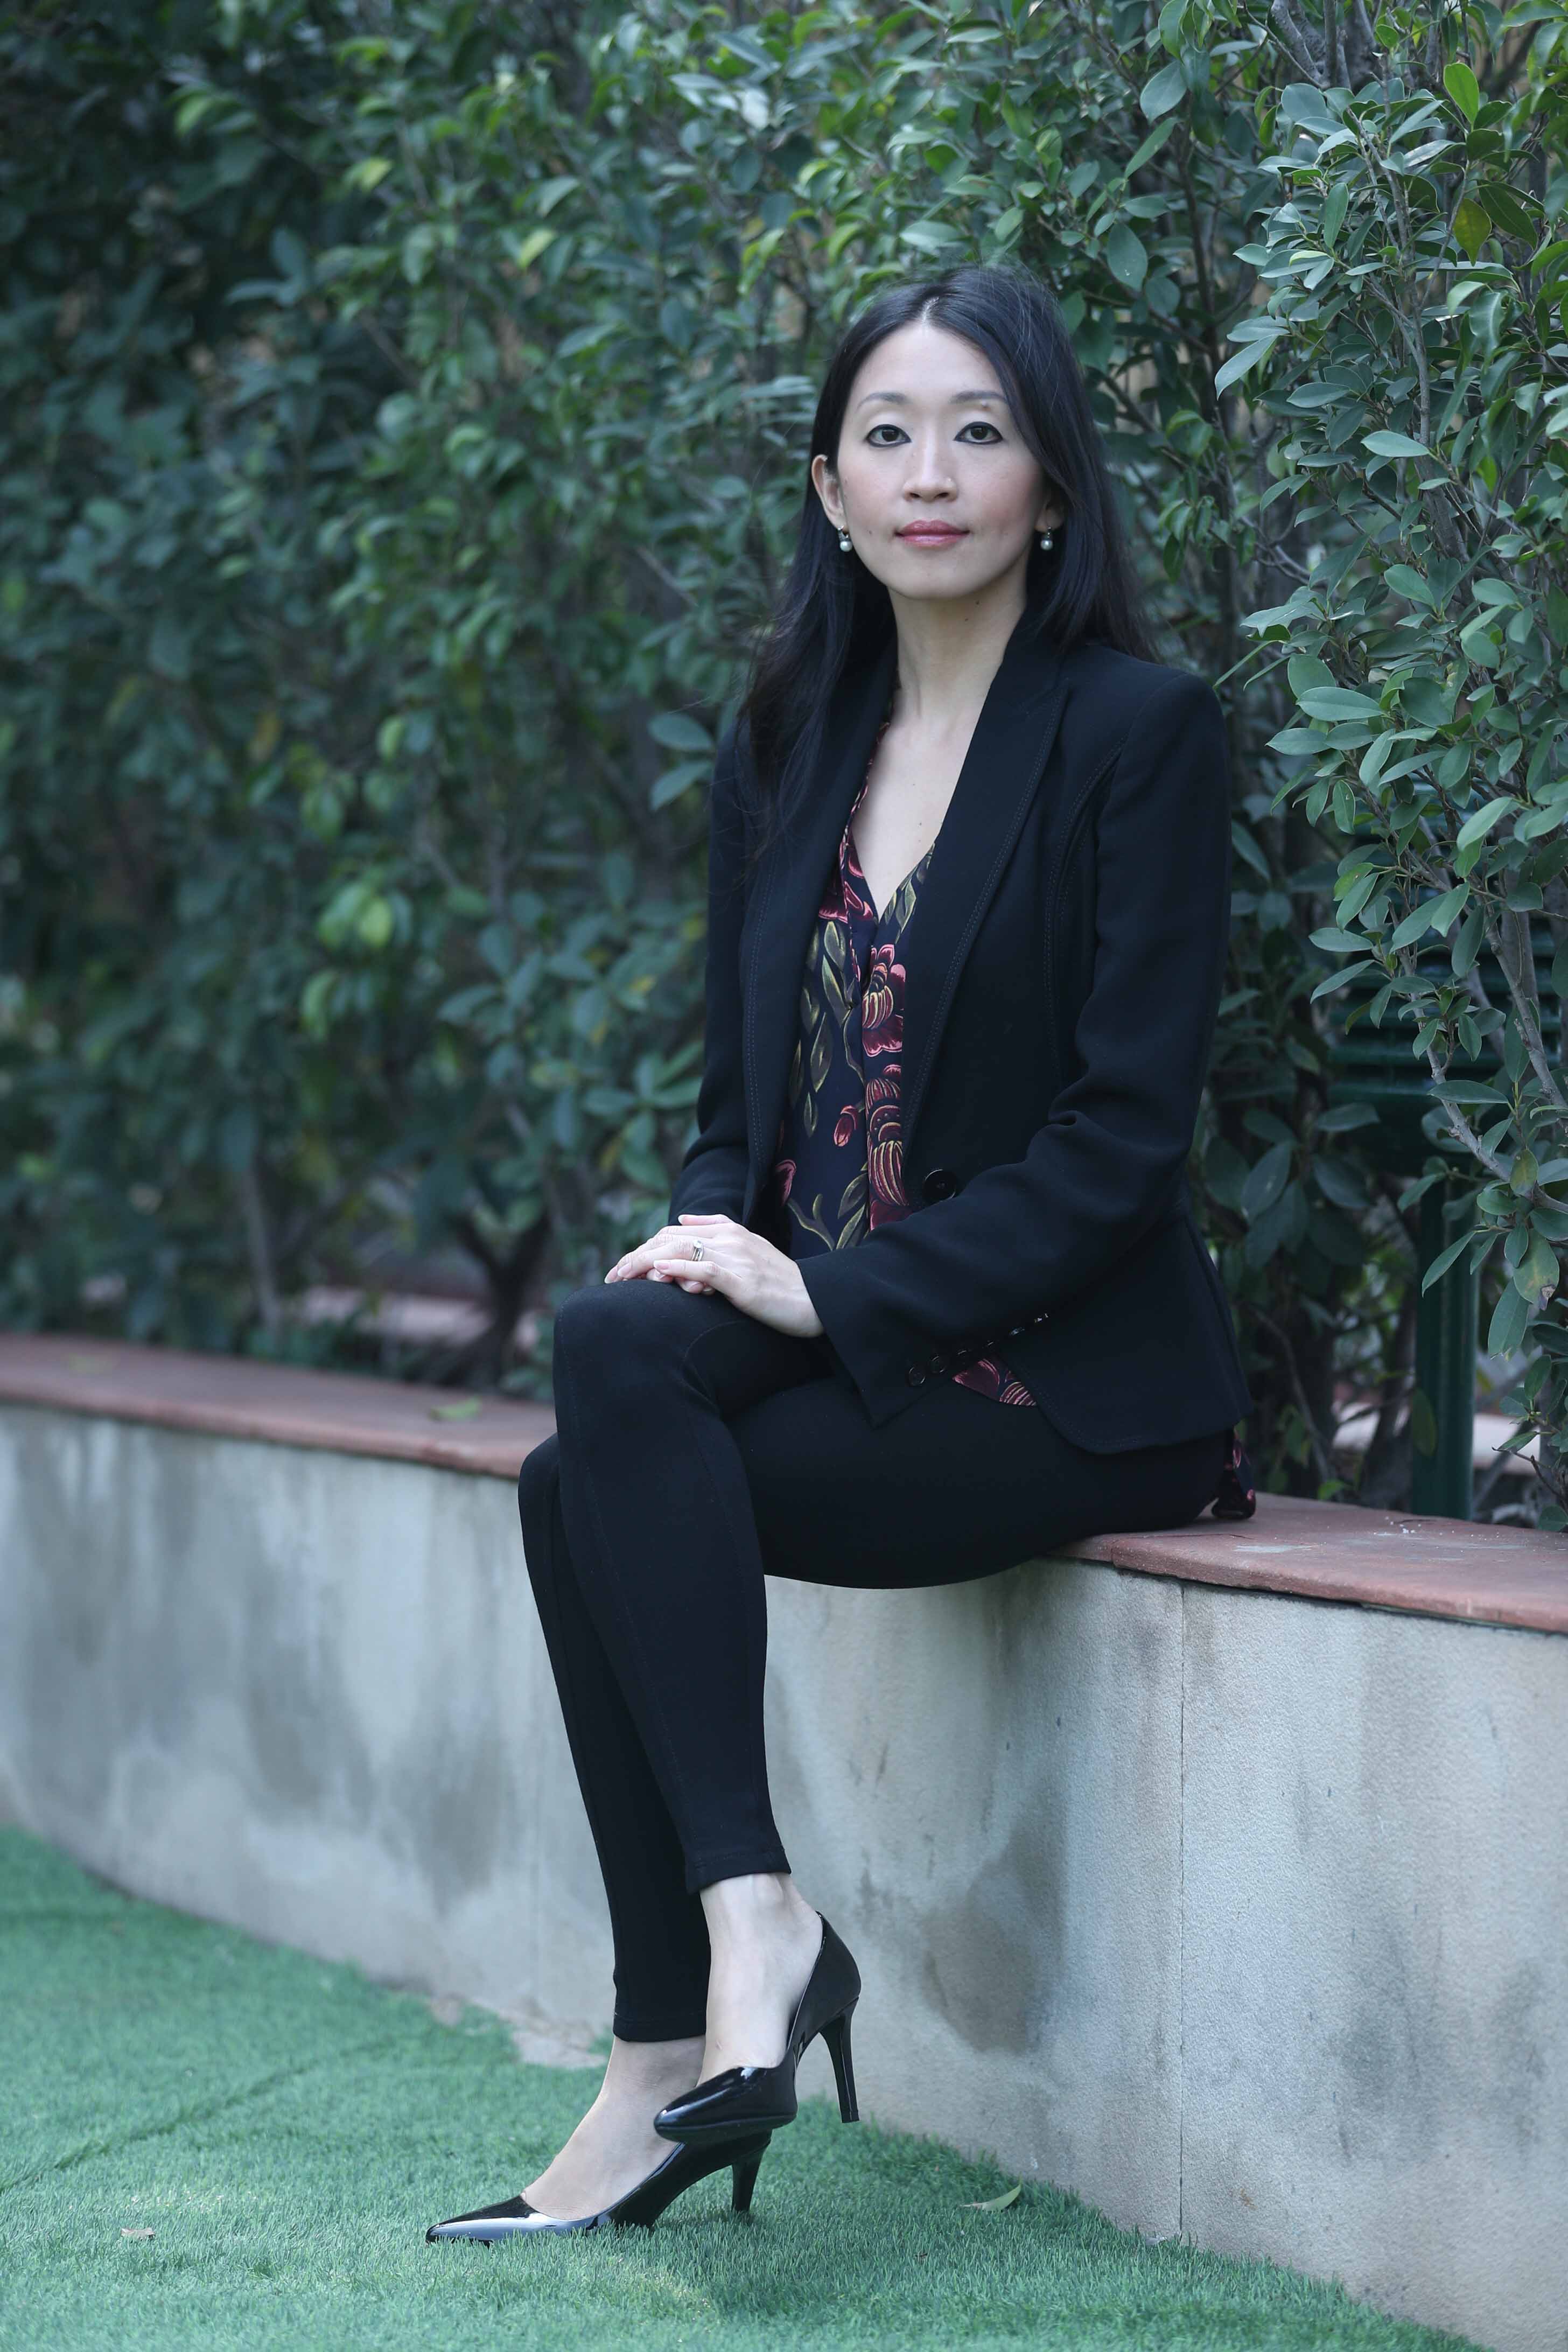 Ms. Venessa Chen, Regional Consumer Marketing Manager, Asia, Tourism New Zealand